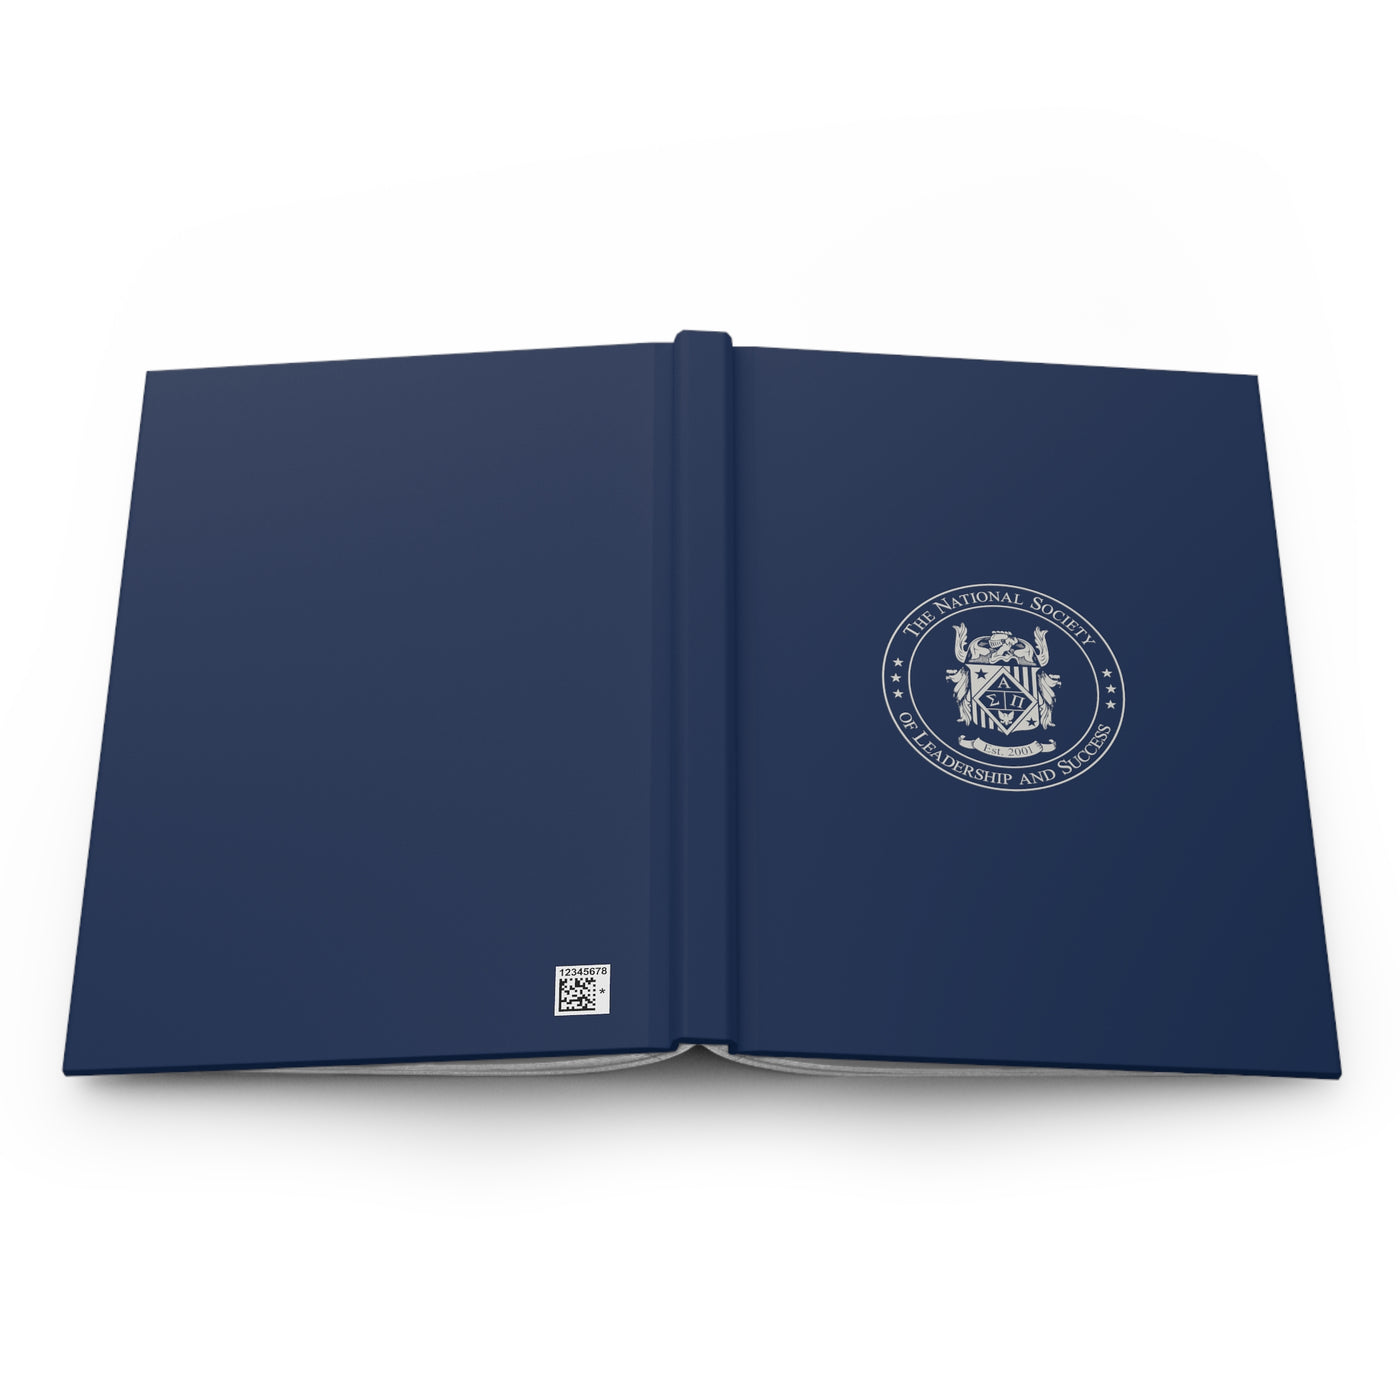 NSLS Seal Hardcover Journal Matte - Blue